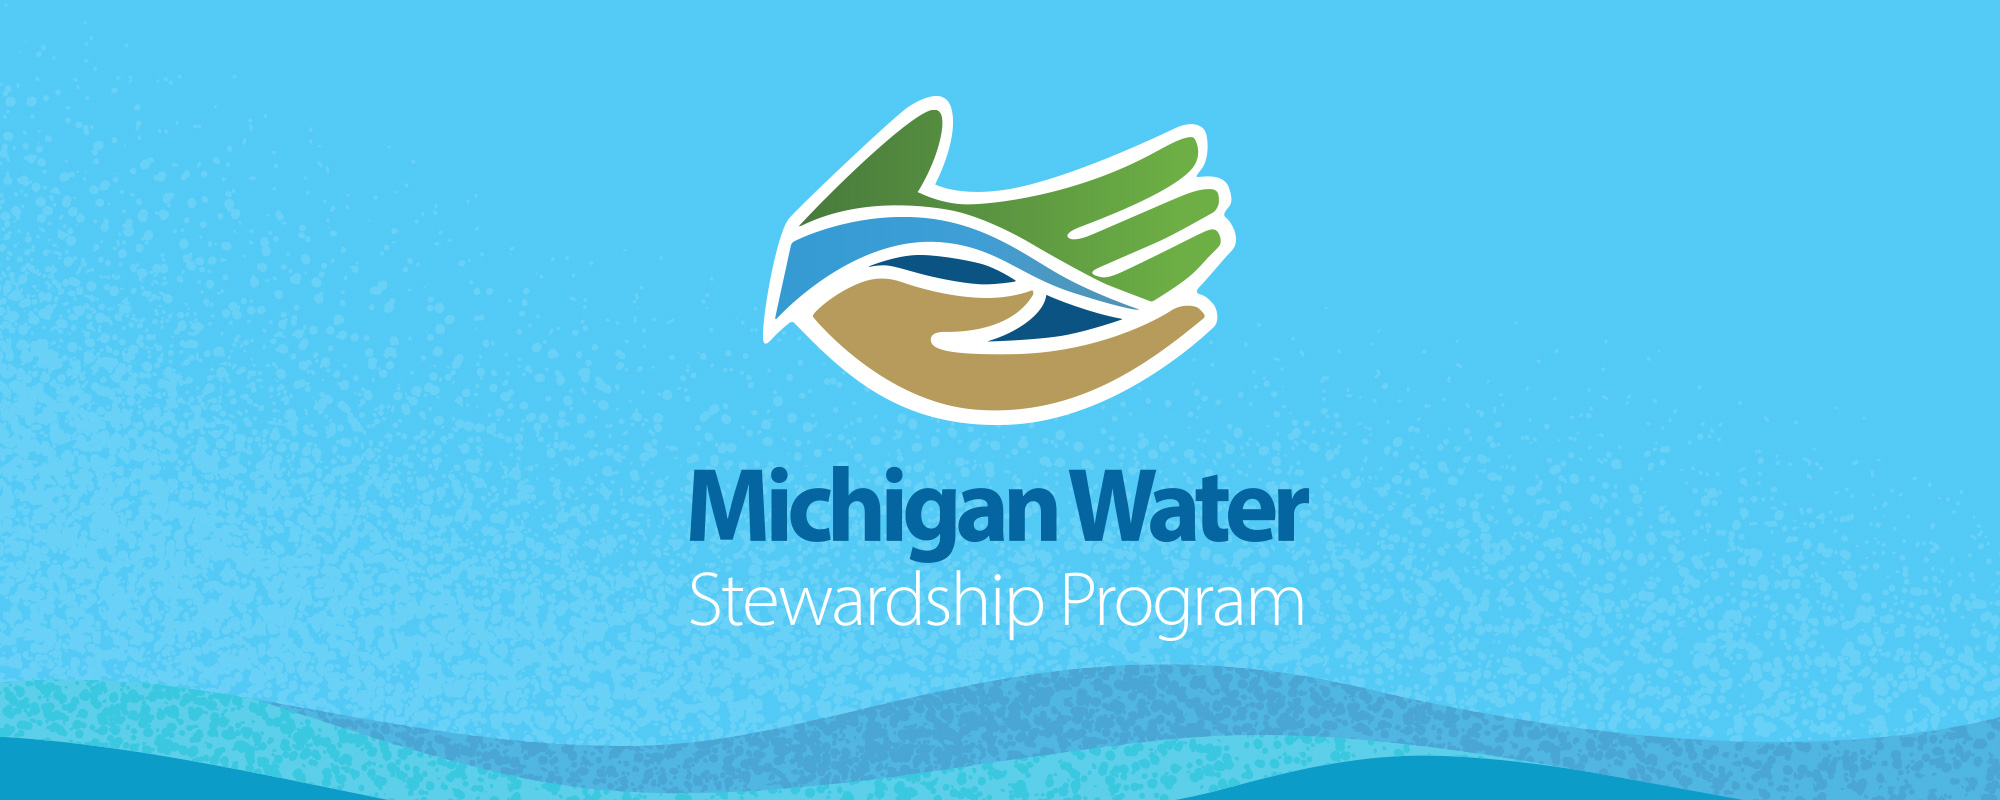 A water graphic showing the Michigan Water Stewardship Program logo.